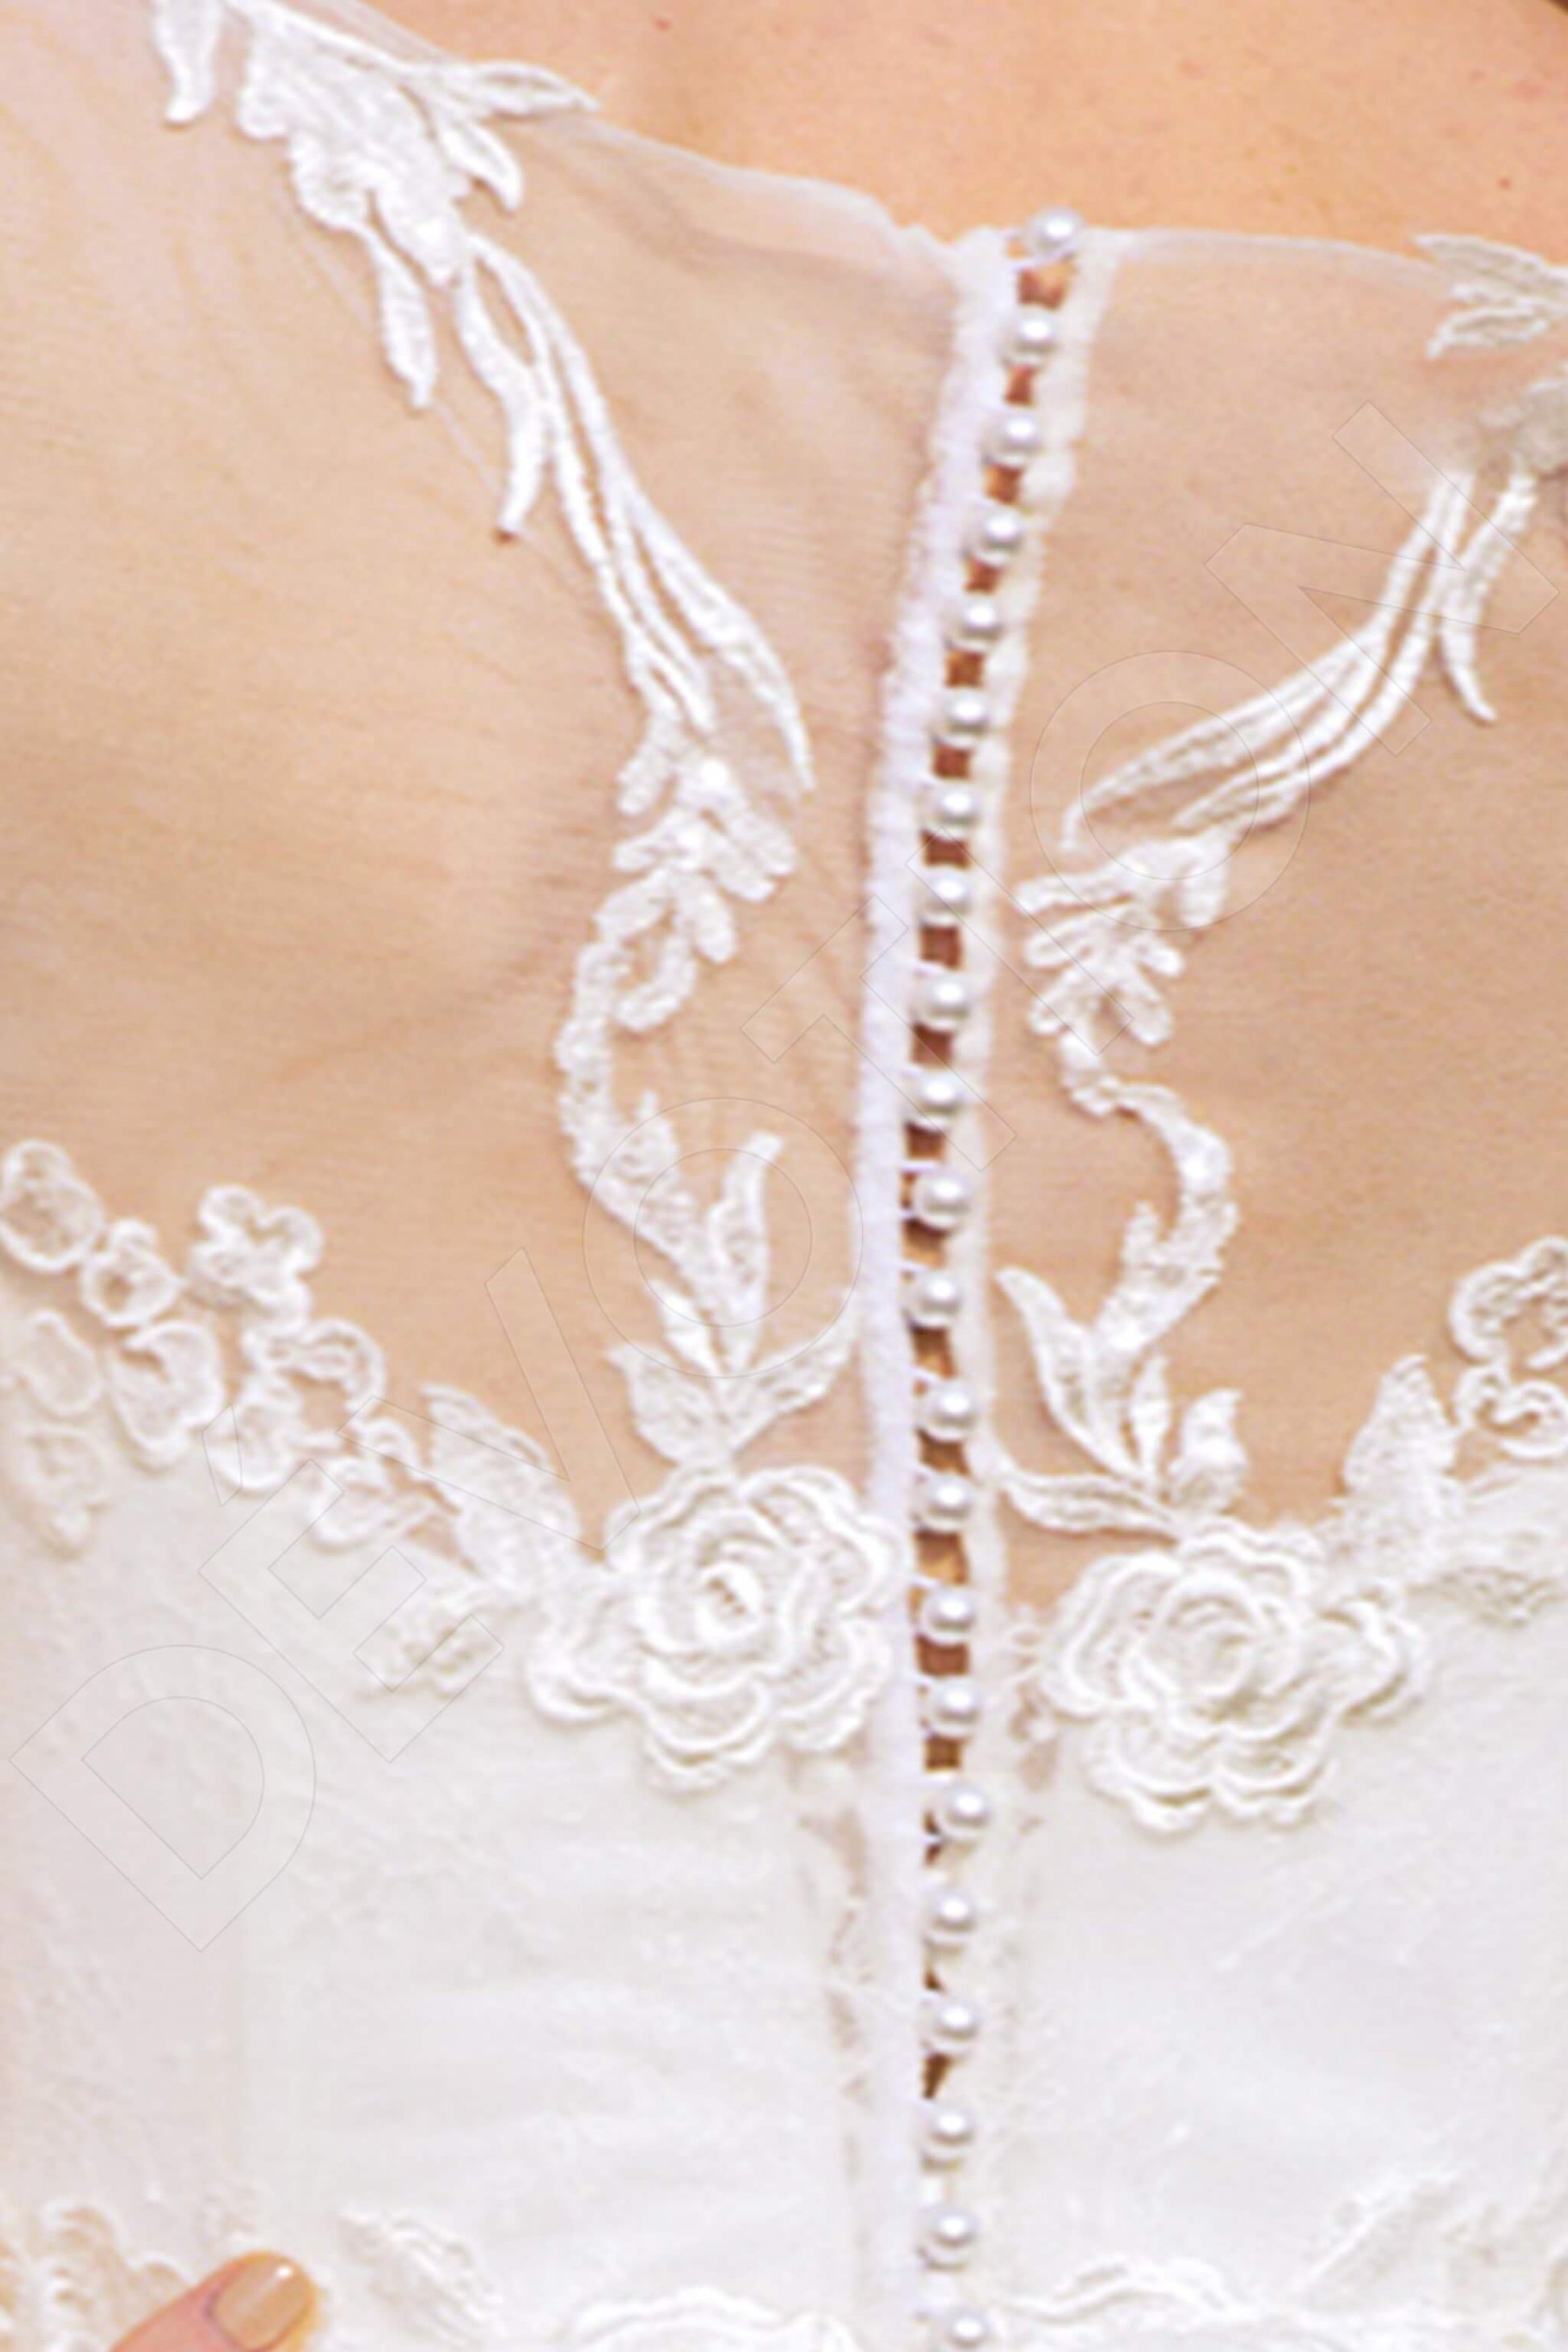 Octaviana Princess/Ball Gown V-neck Lightivory Wedding dress